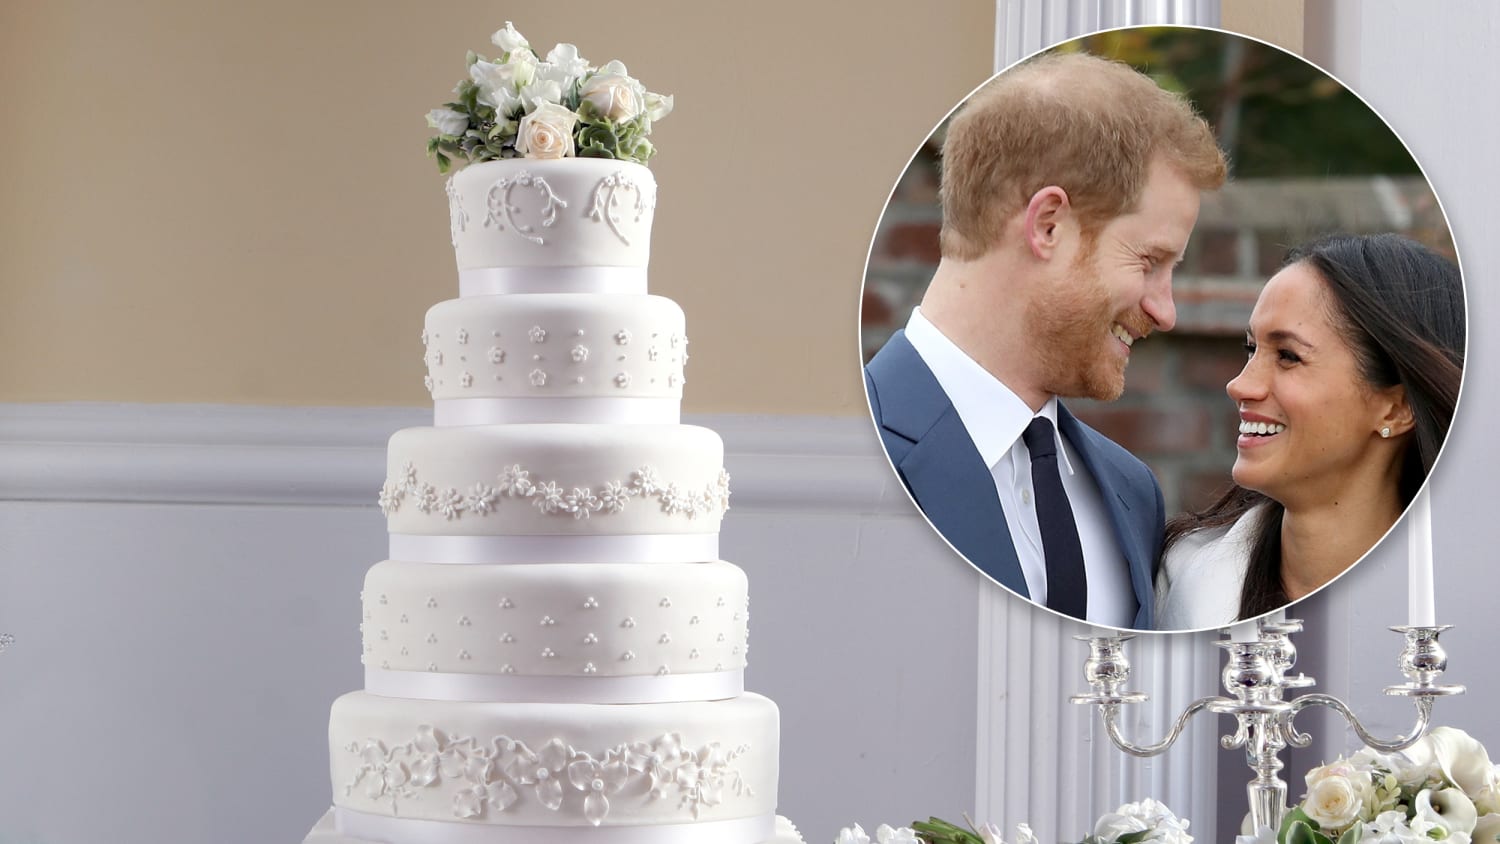 Image for the royal wedding cake 1981